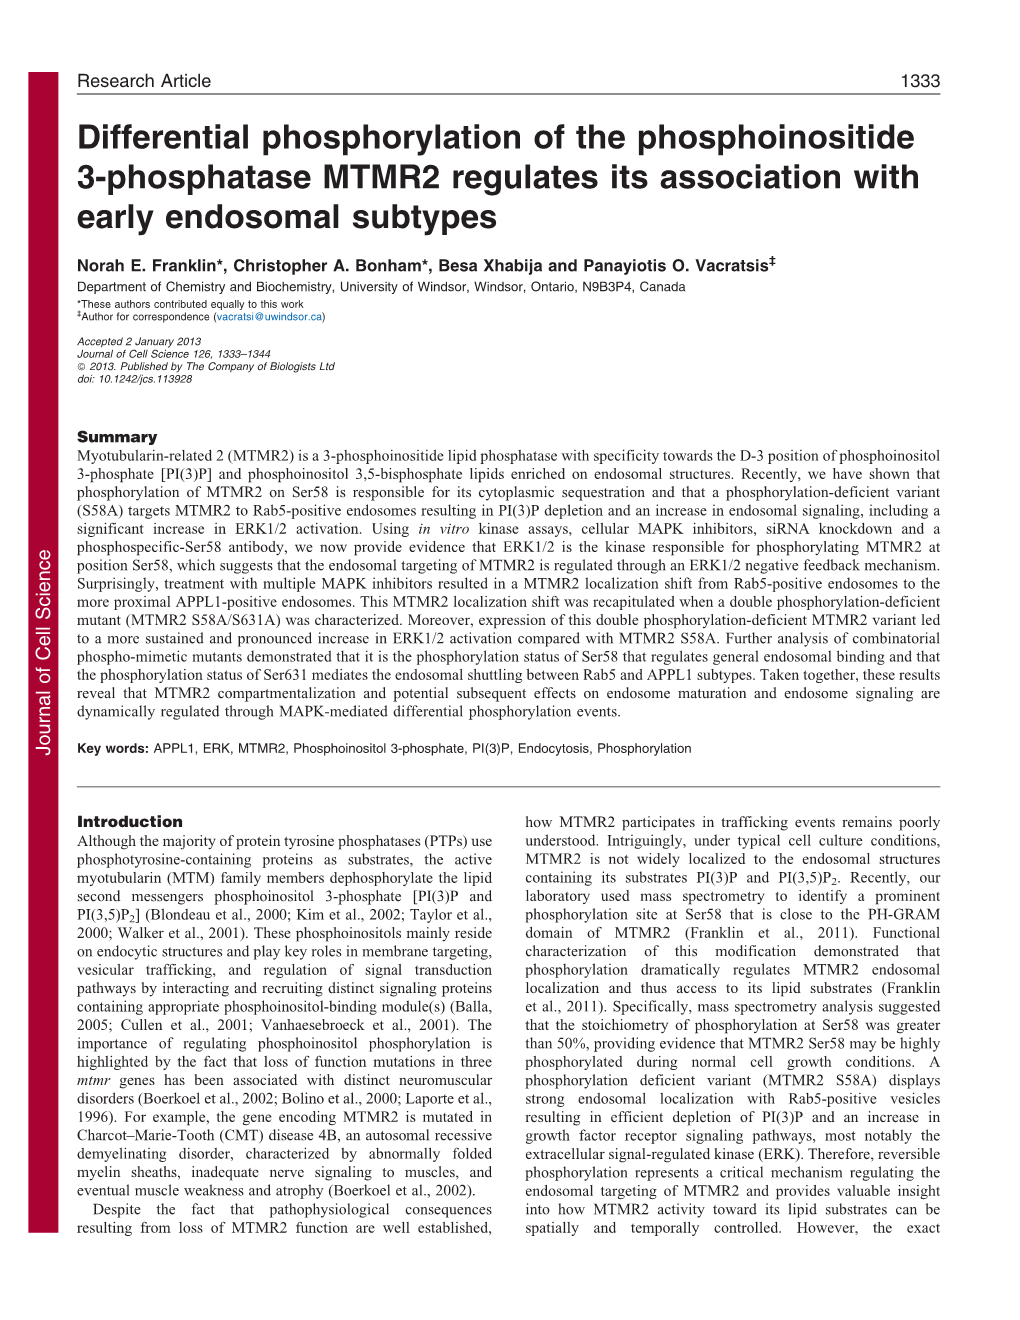 Differential Phosphorylation of the Phosphoinositide 3-Phosphatase